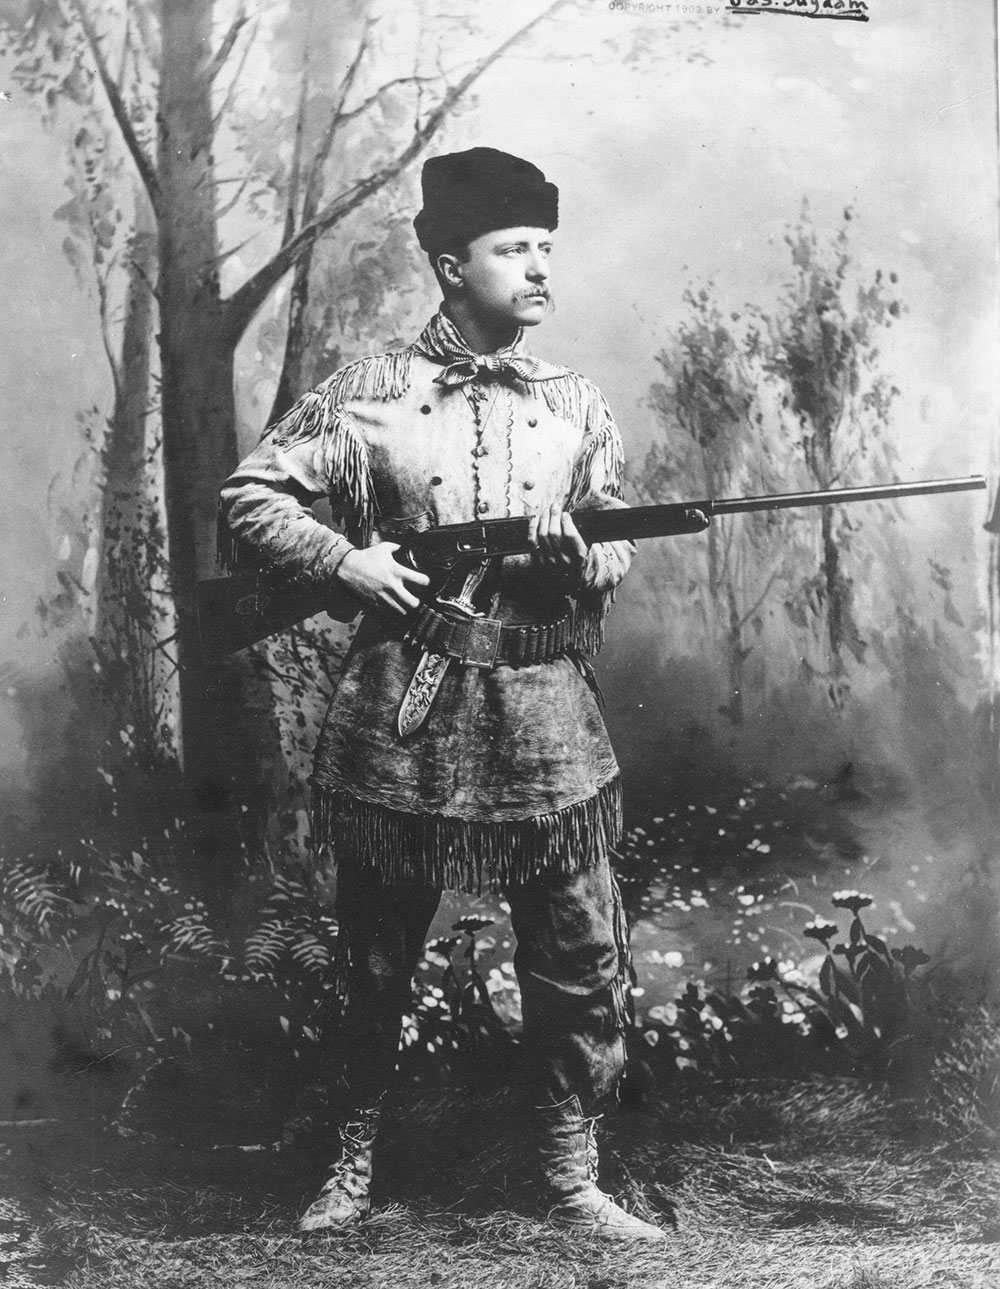 Theodore Roosevelt in historic hunting attire.